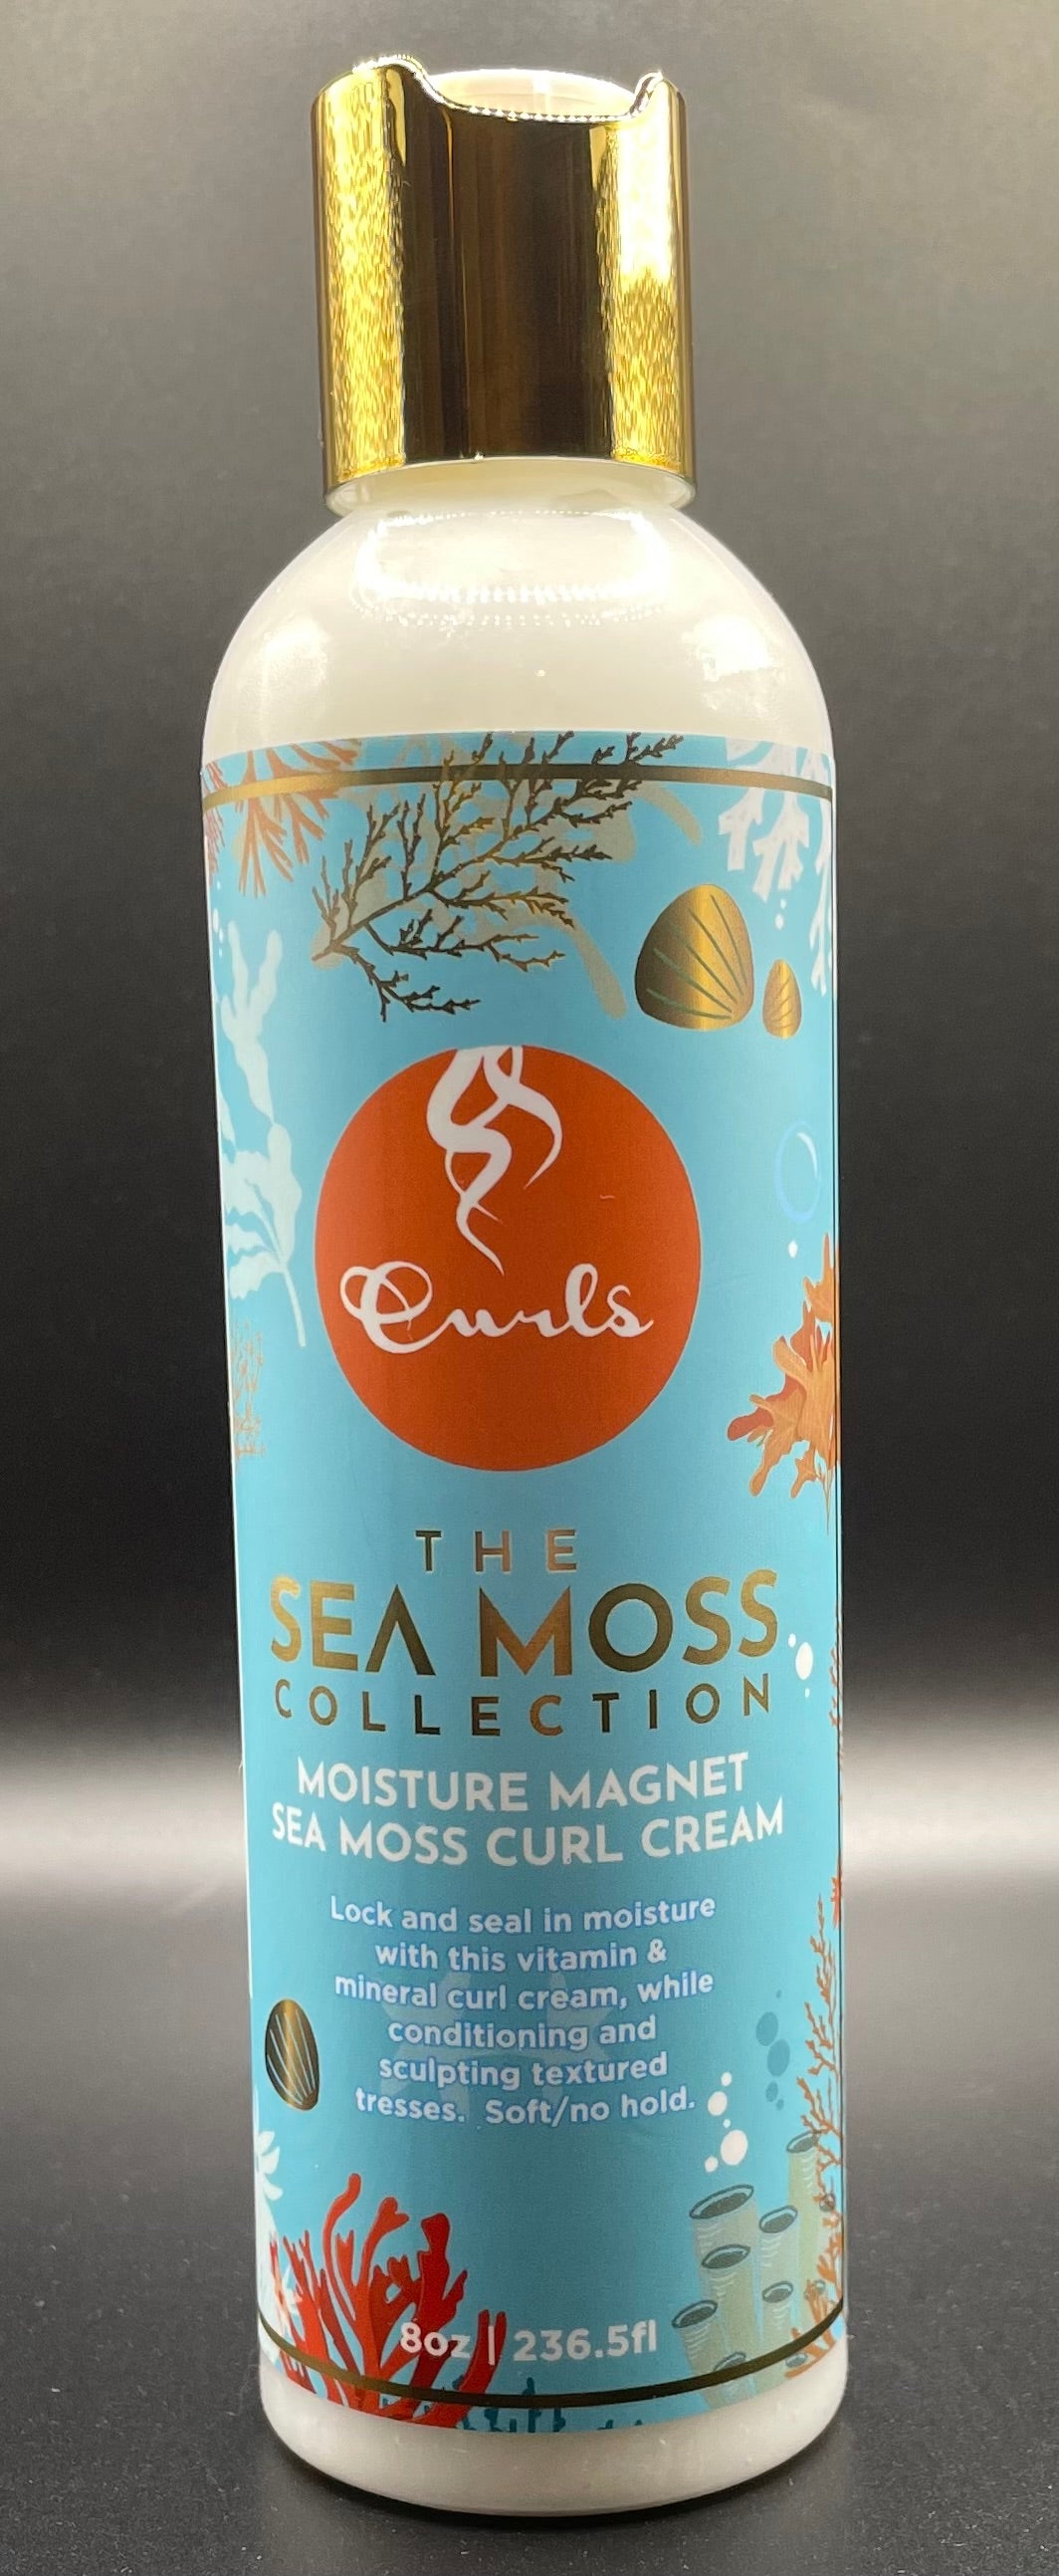 Curls-Moisture Magnet Sea Moss Curl Cream